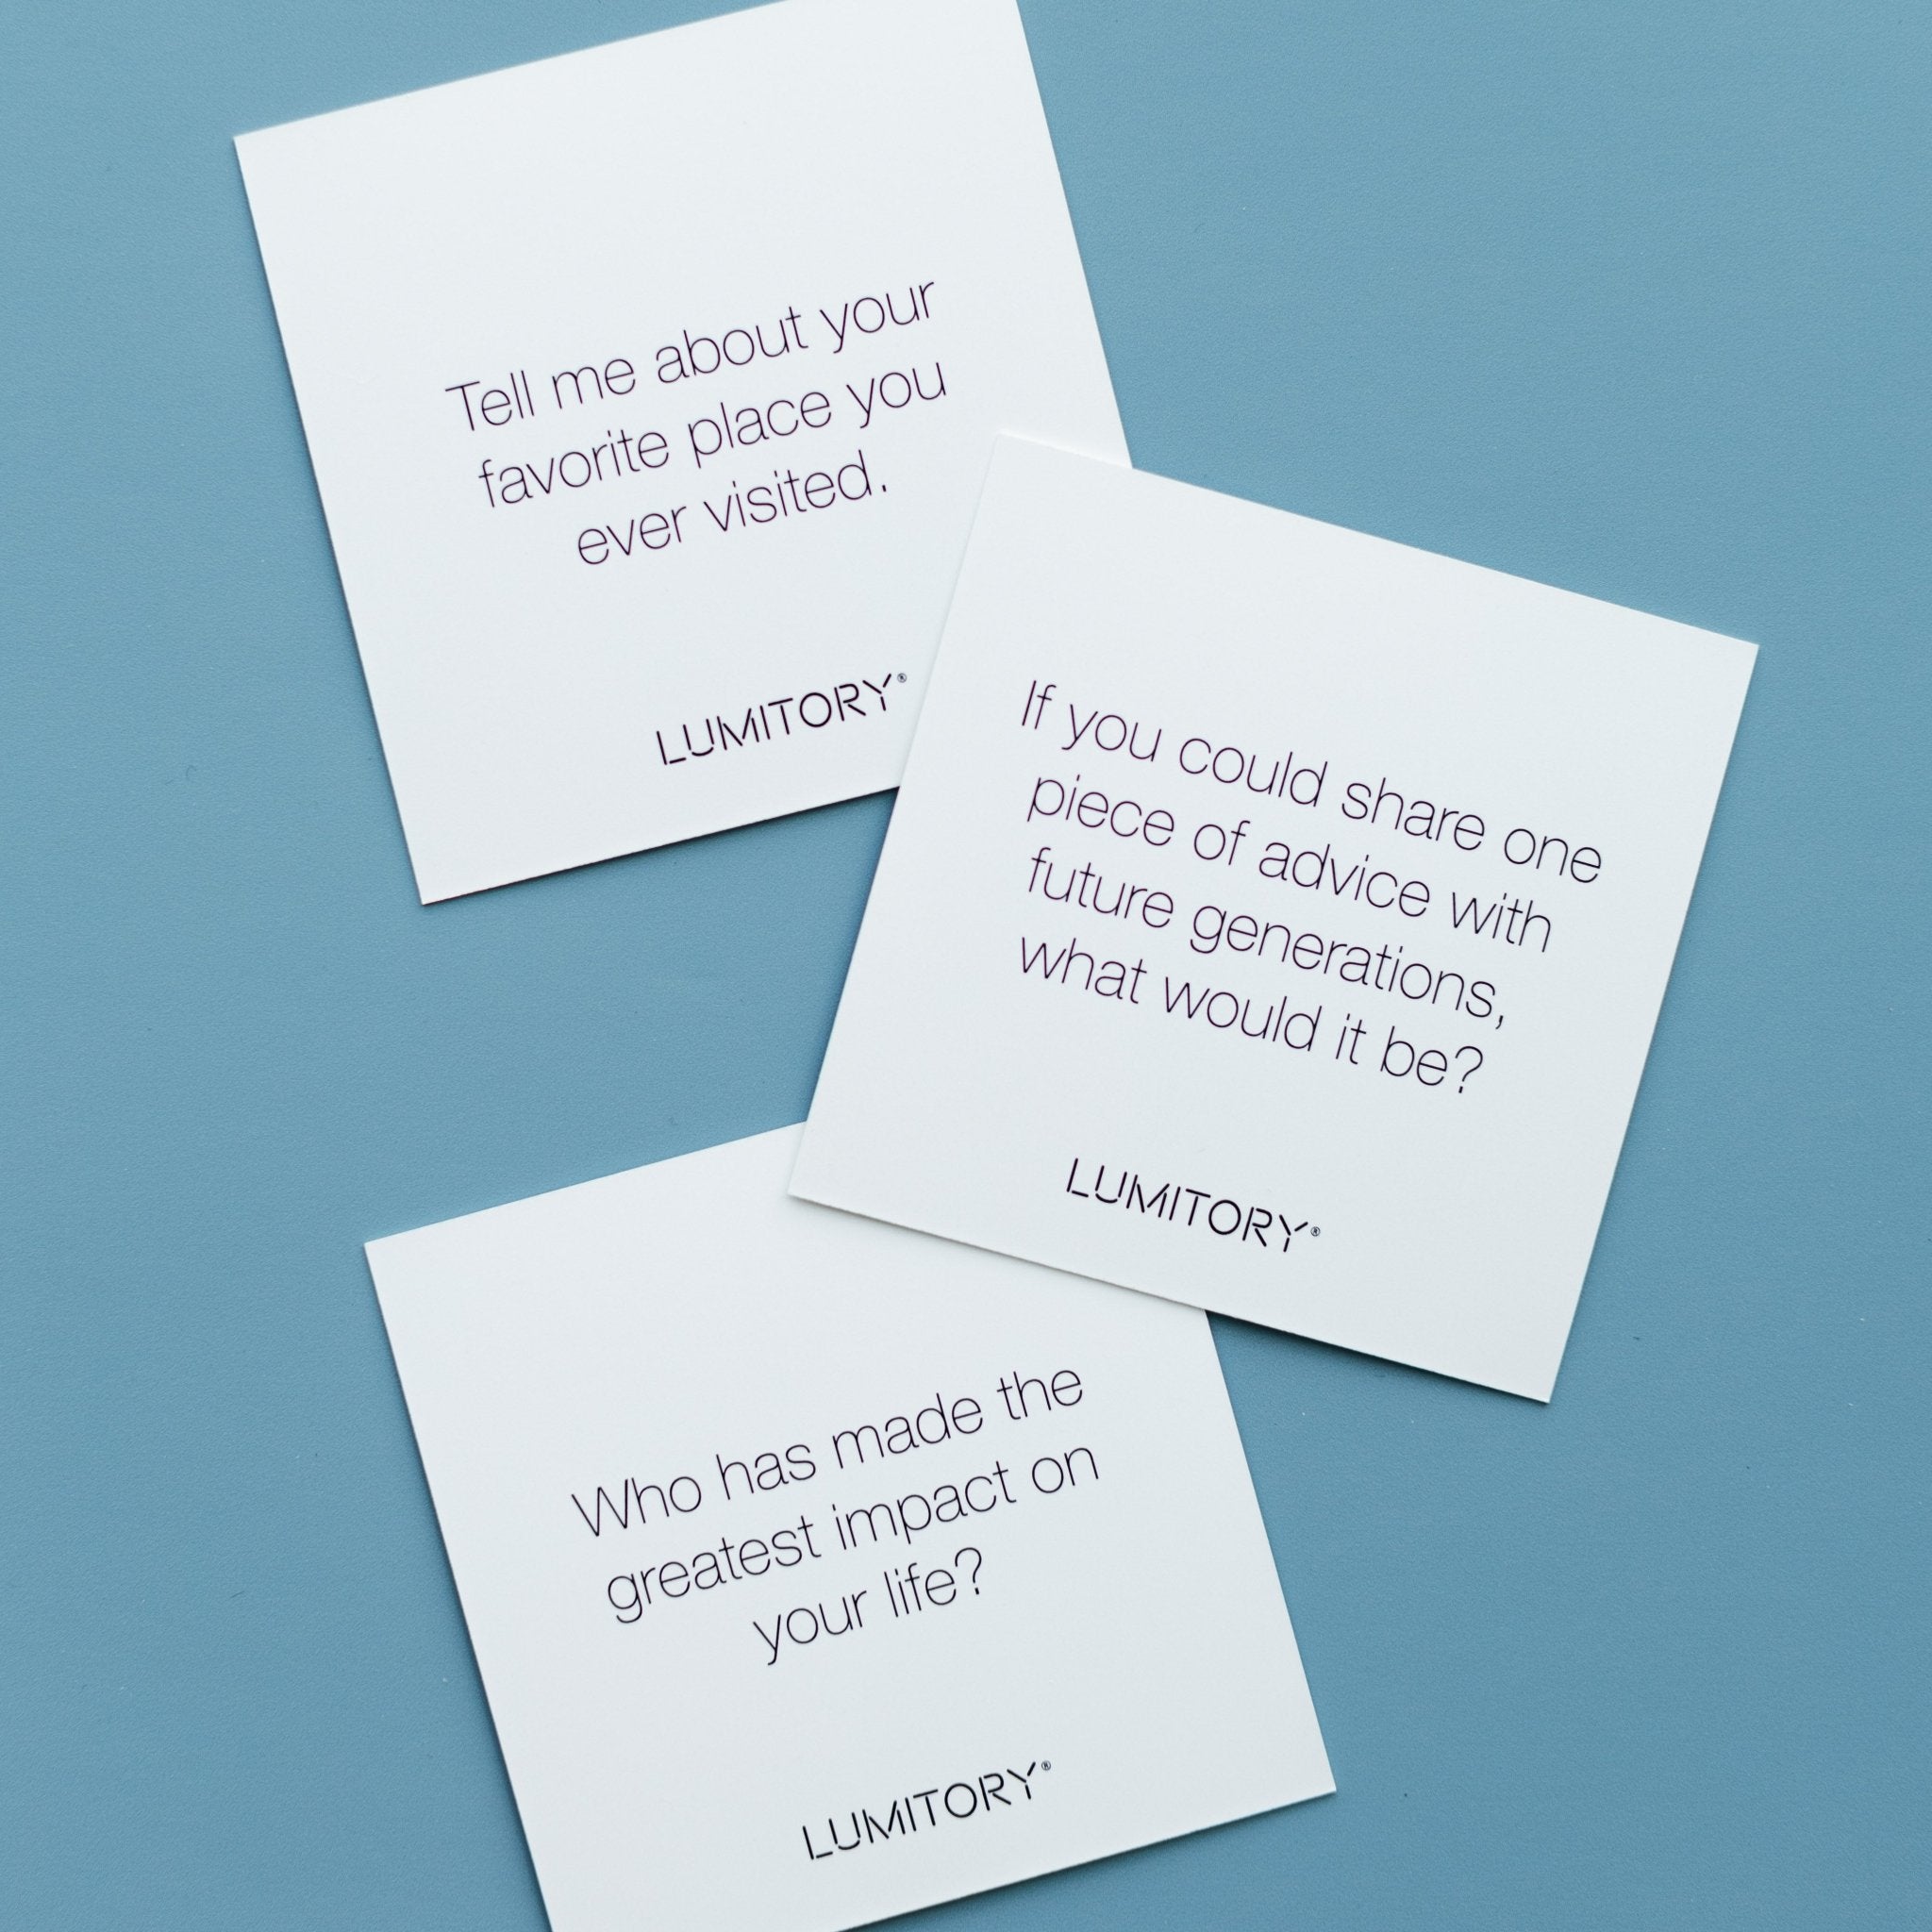 Legacy Conversation Cards - Lumitory